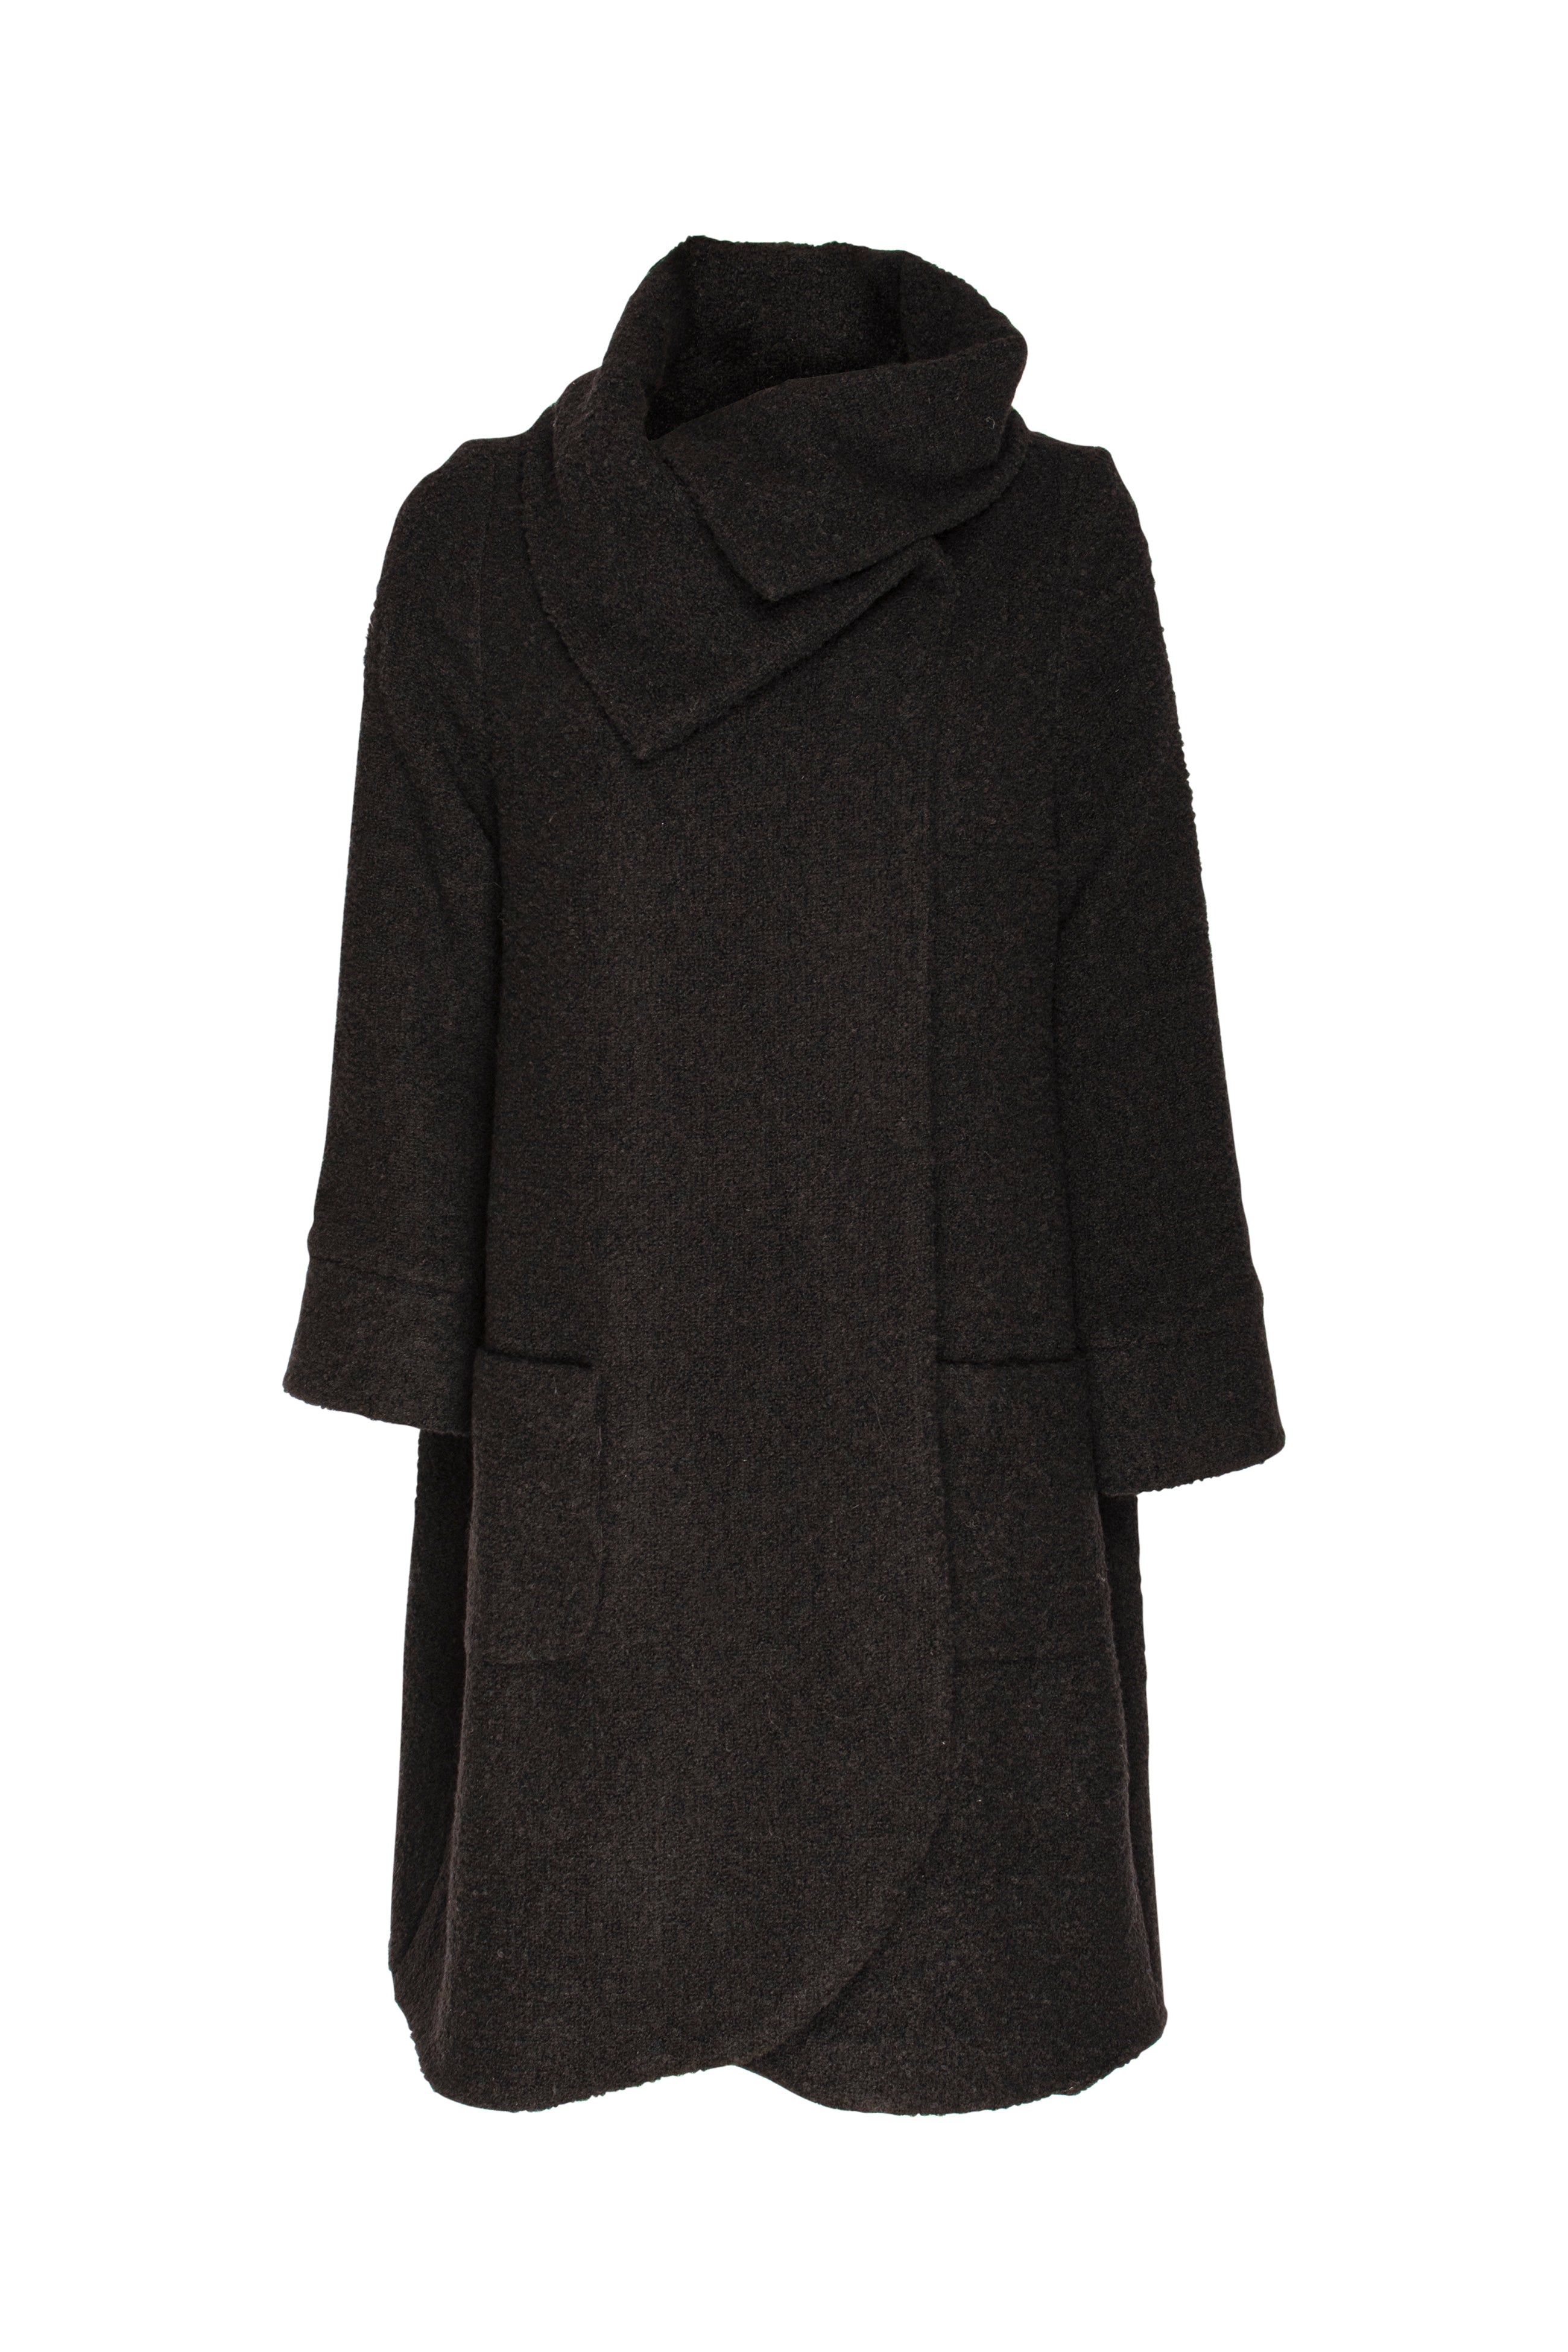 Crossover Collar Coat - Black Texture 5017